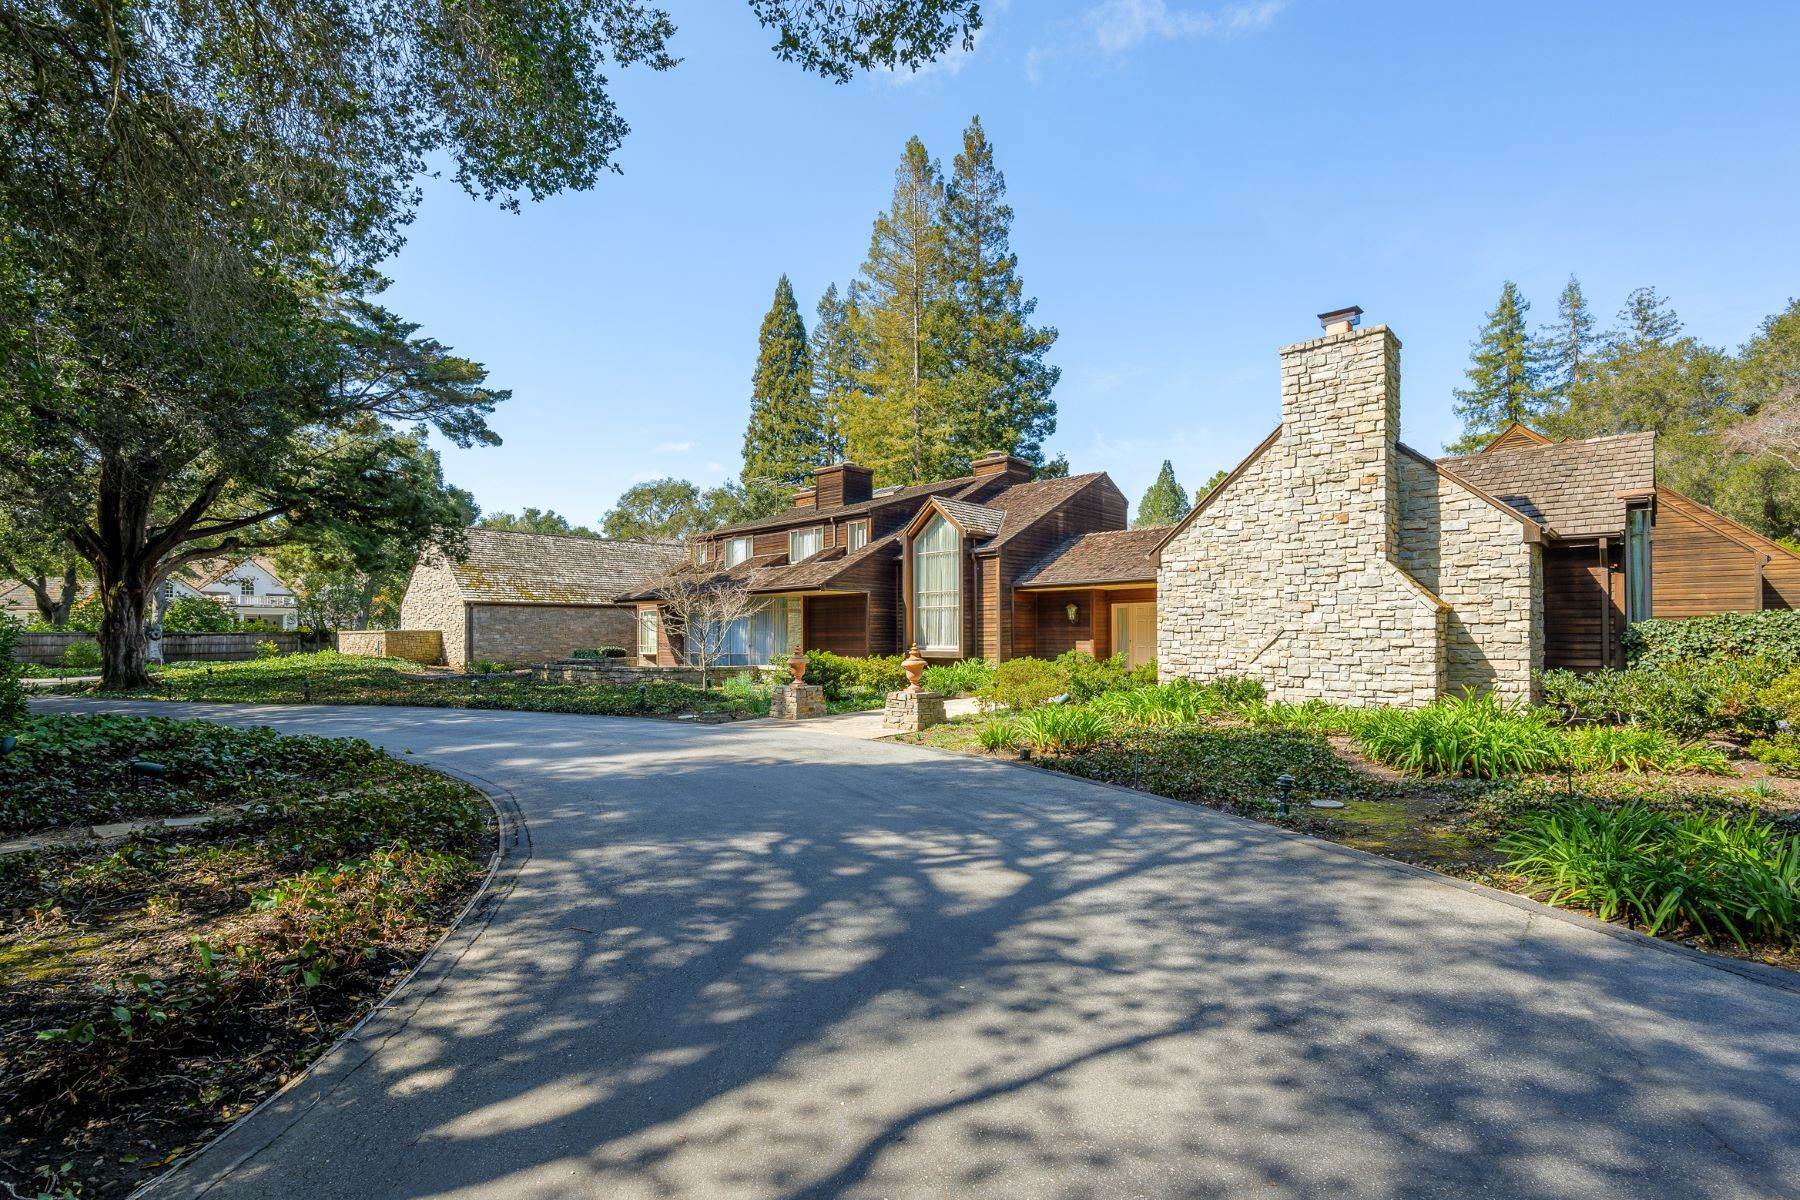 Single Family Homes for Sale at Peaceful Estate in Prime Atherton Location 80 Coghlan Lane Atherton, California 94027 United States